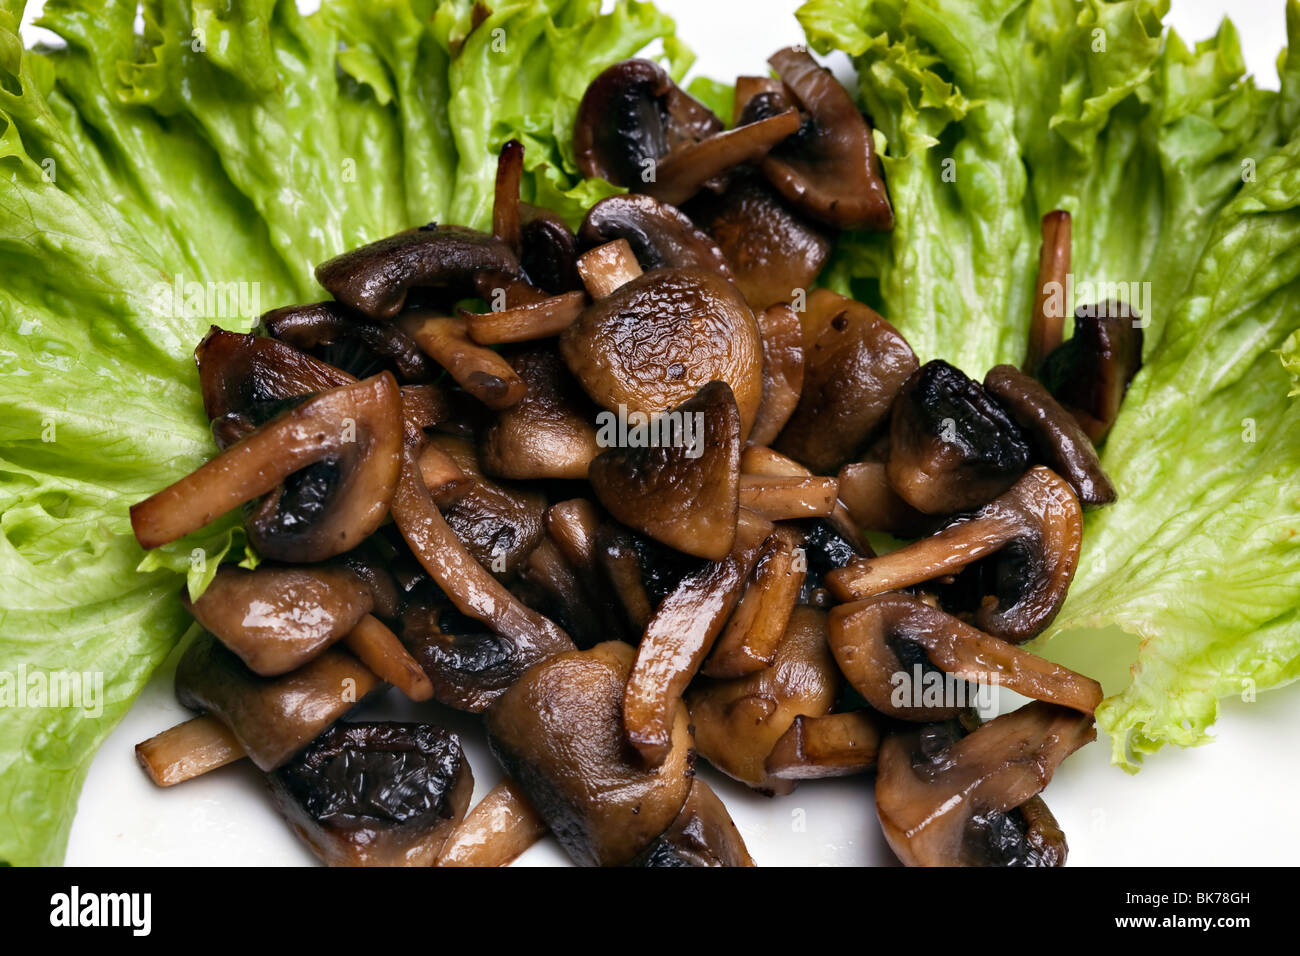 Grilled mushrooms champignon on salat Stock Photo